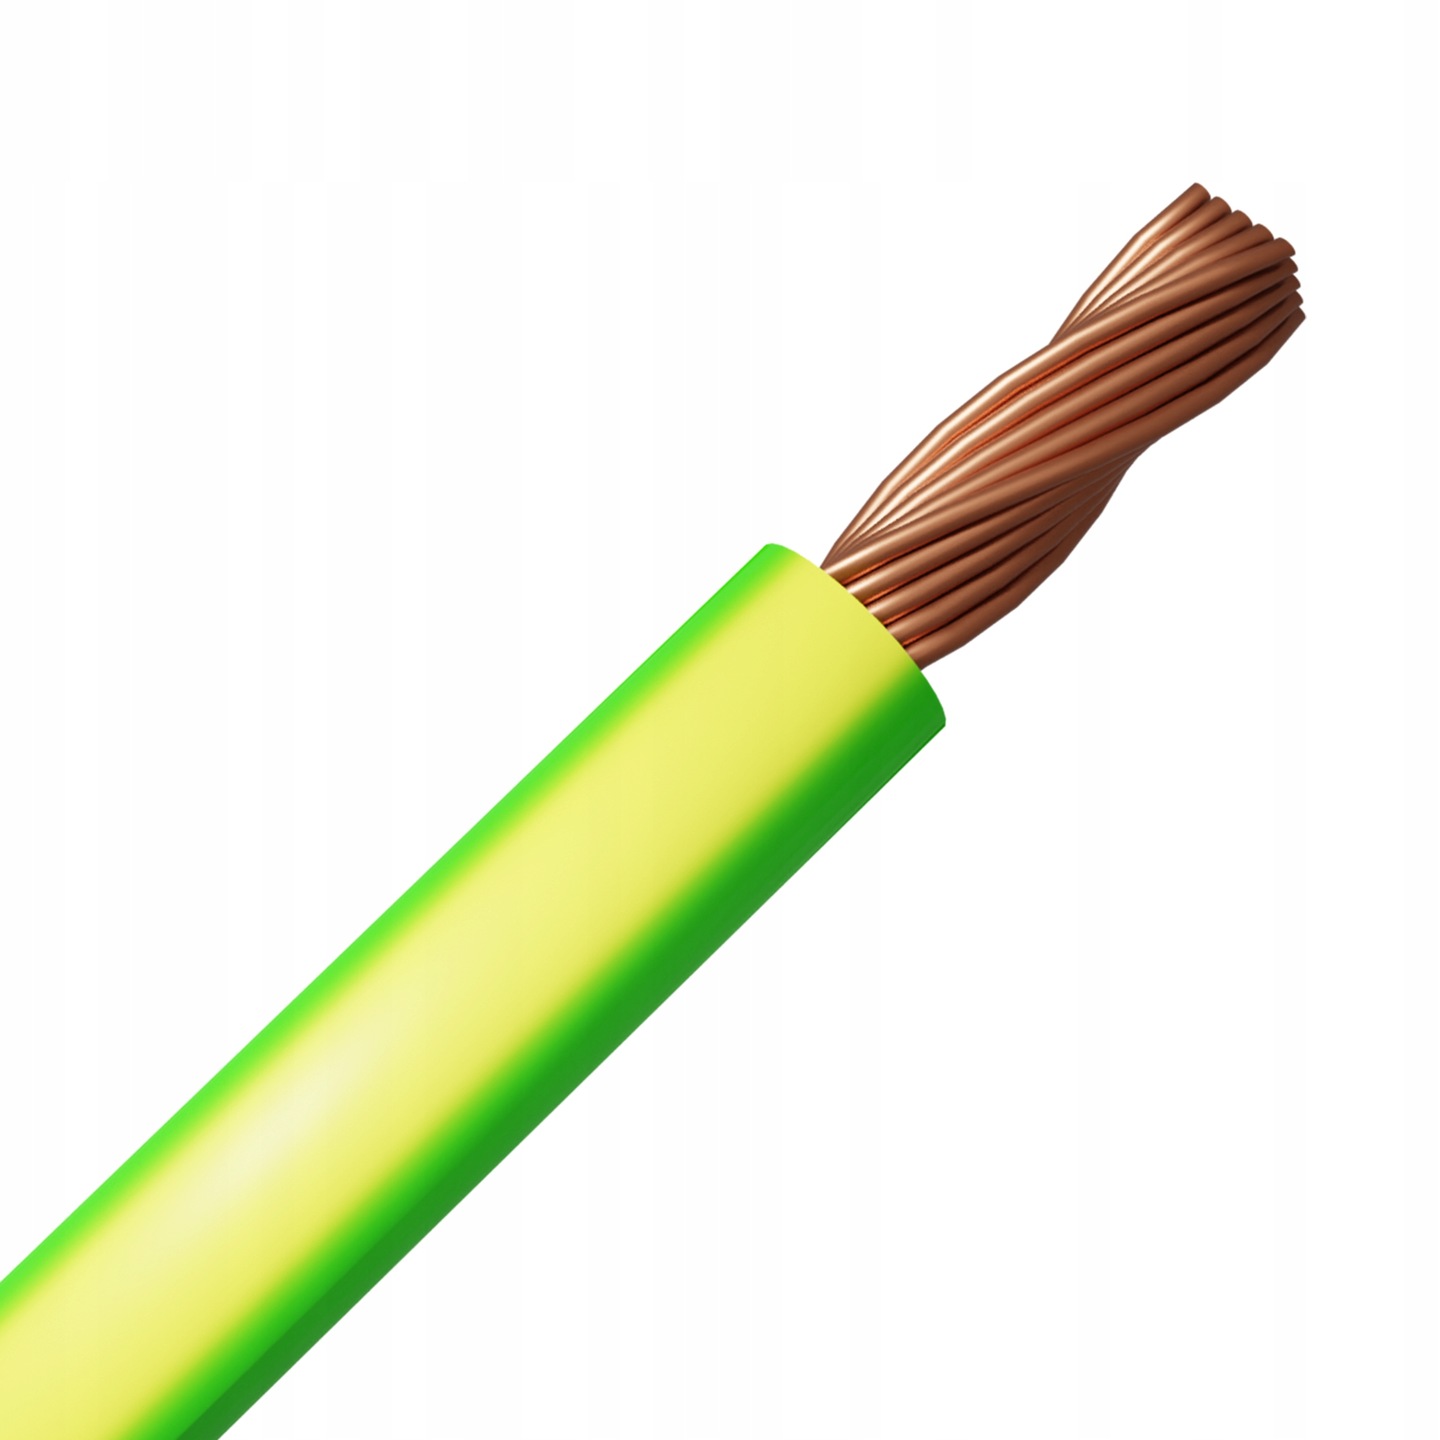 Przewód linka LgY żółto-zielony 4mm2 750V - 1m Telefonika Kable G-002960